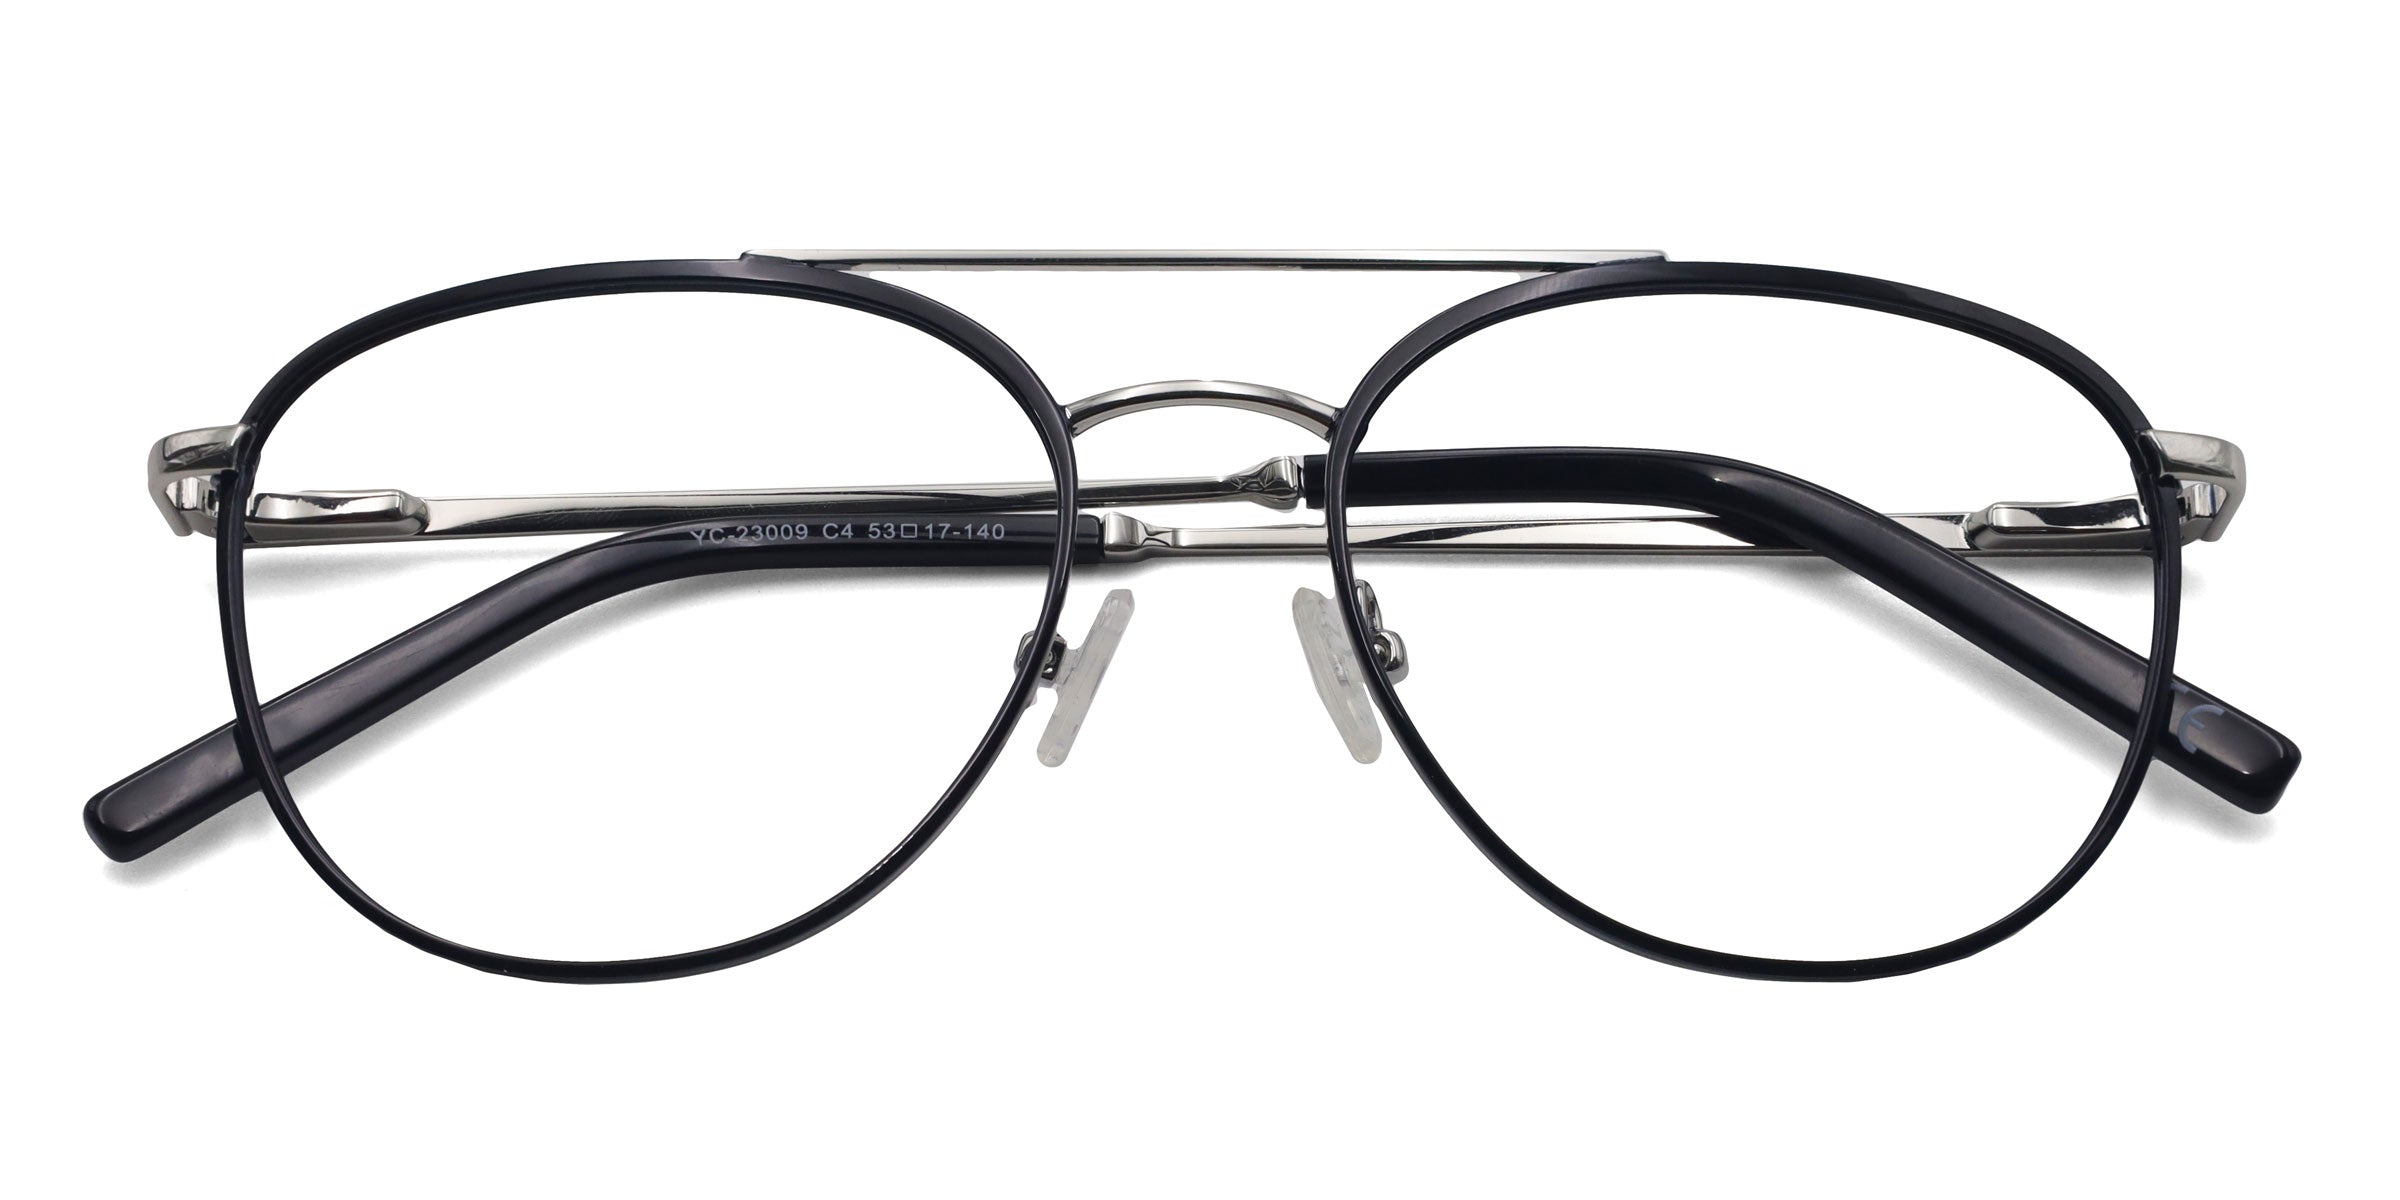 Kind Aviator Black eyeglasses frames top view